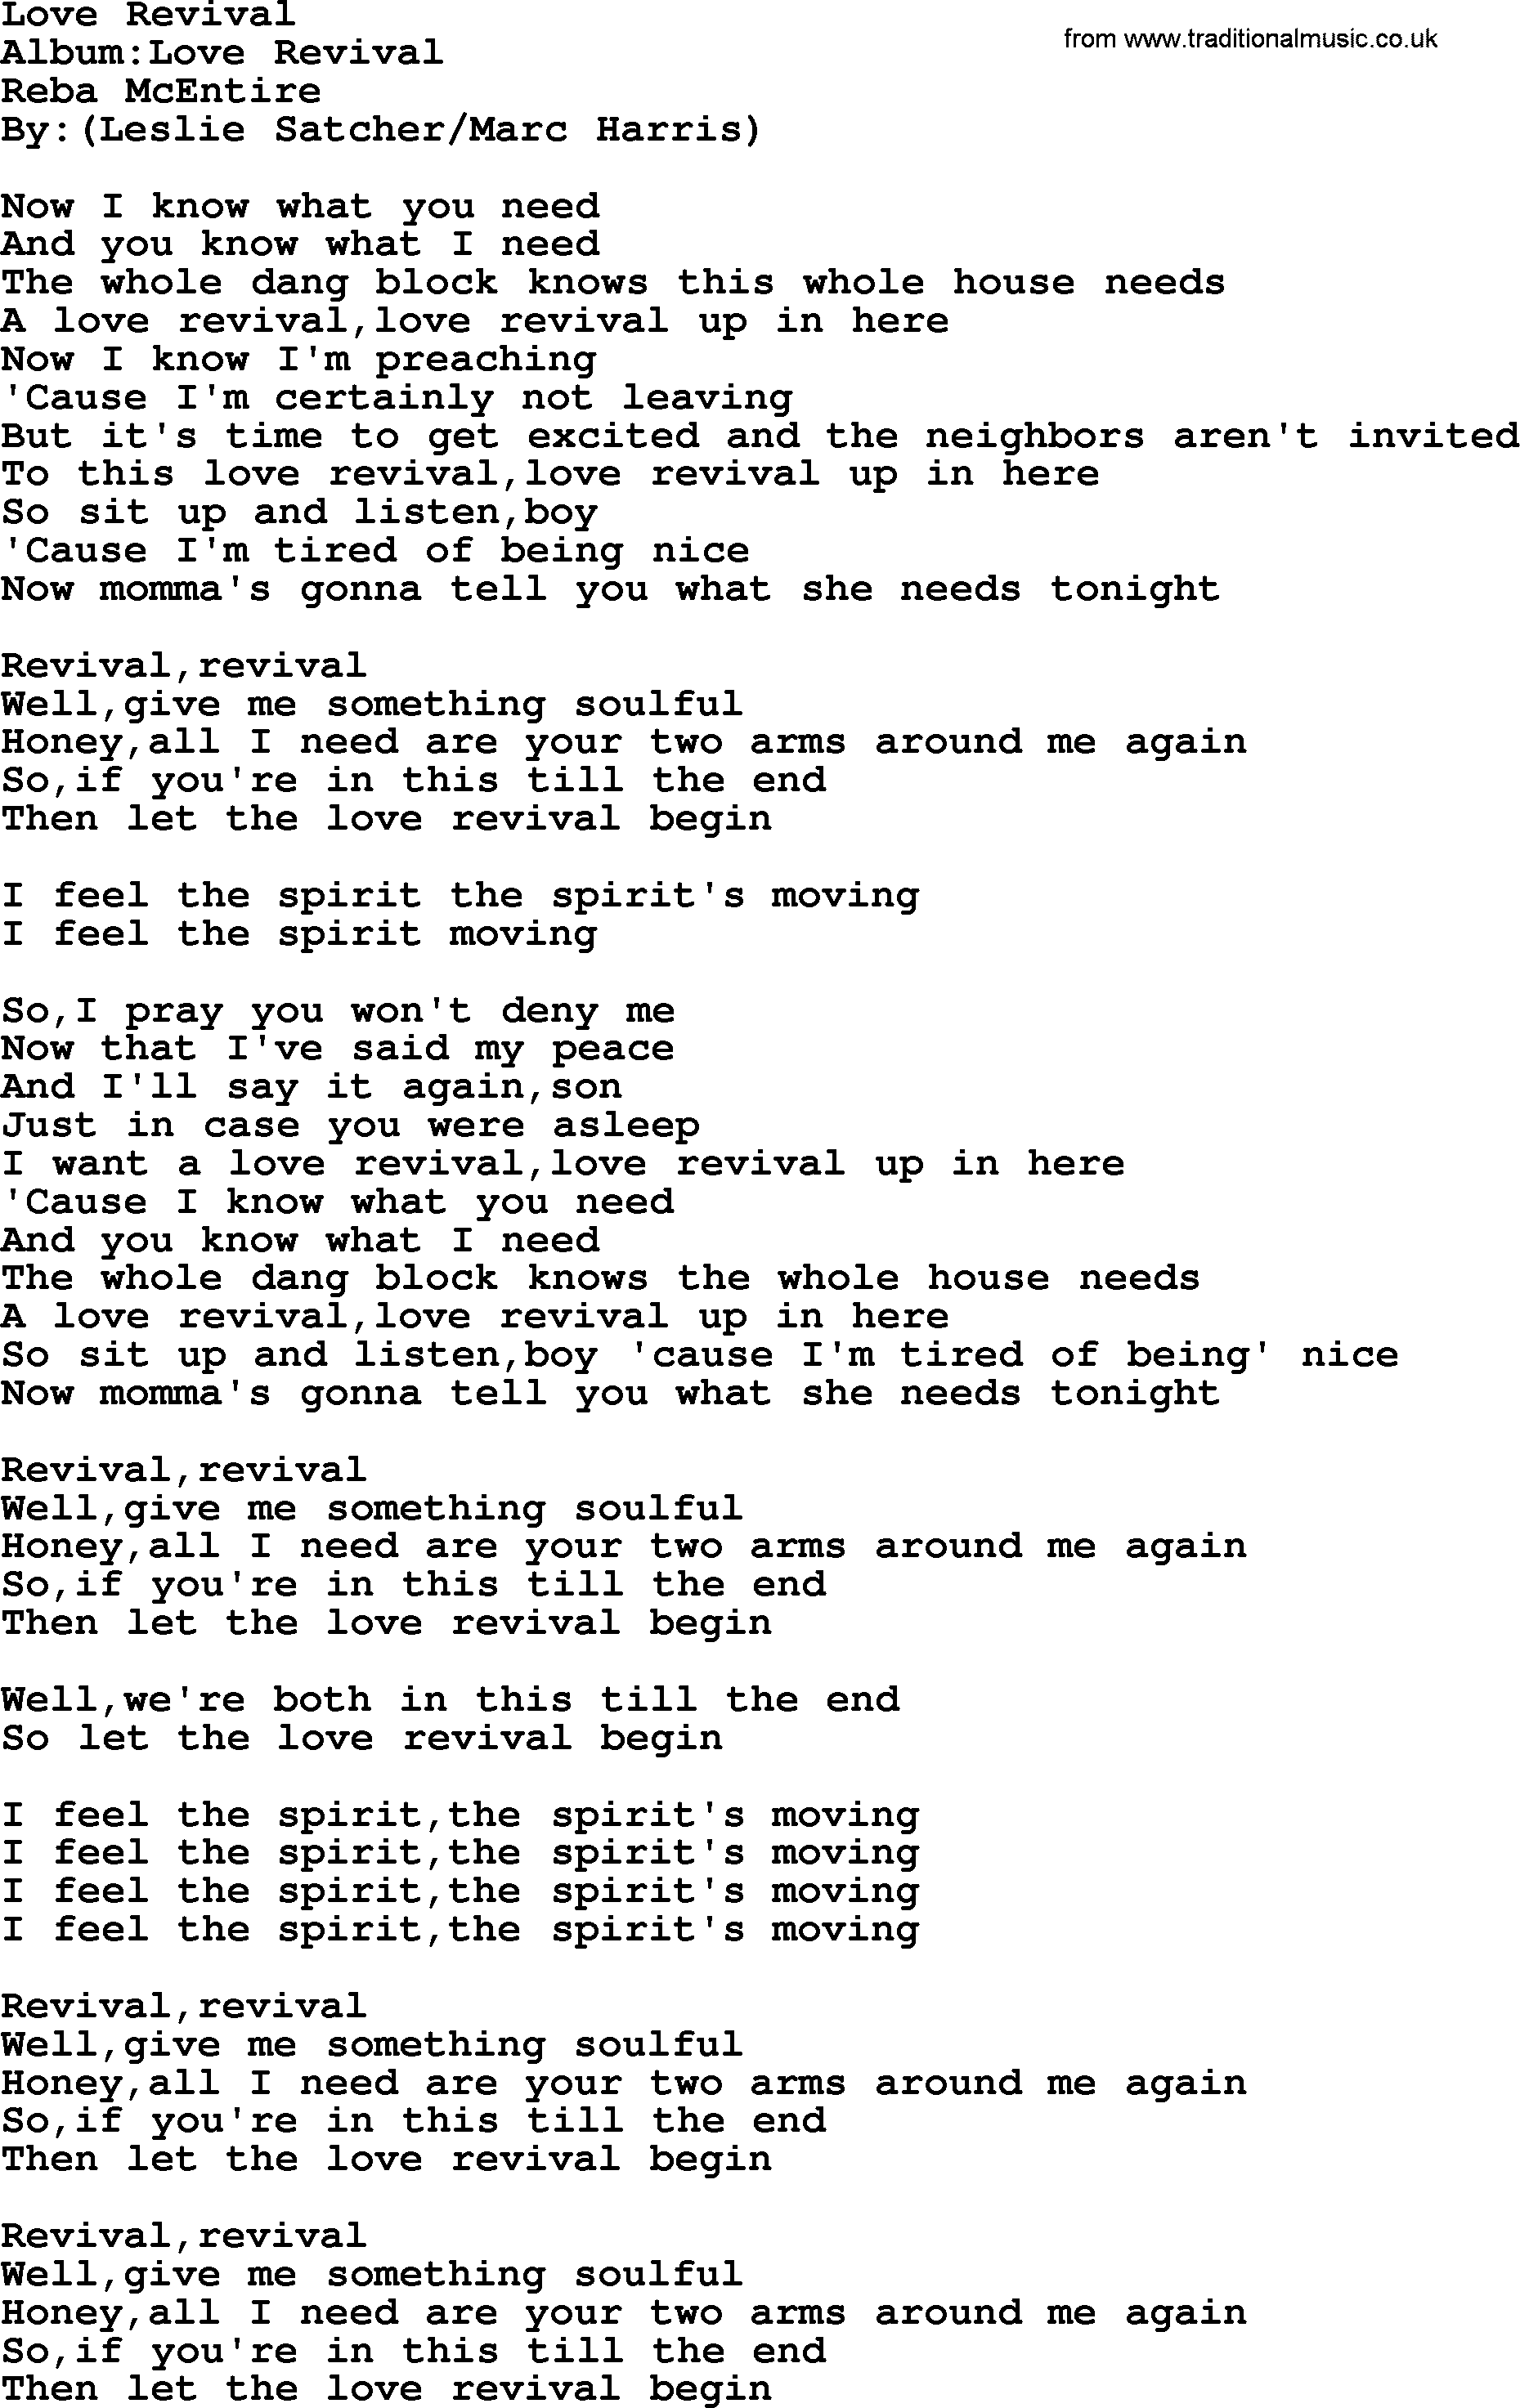 Reba McEntire song: Love Revival lyrics